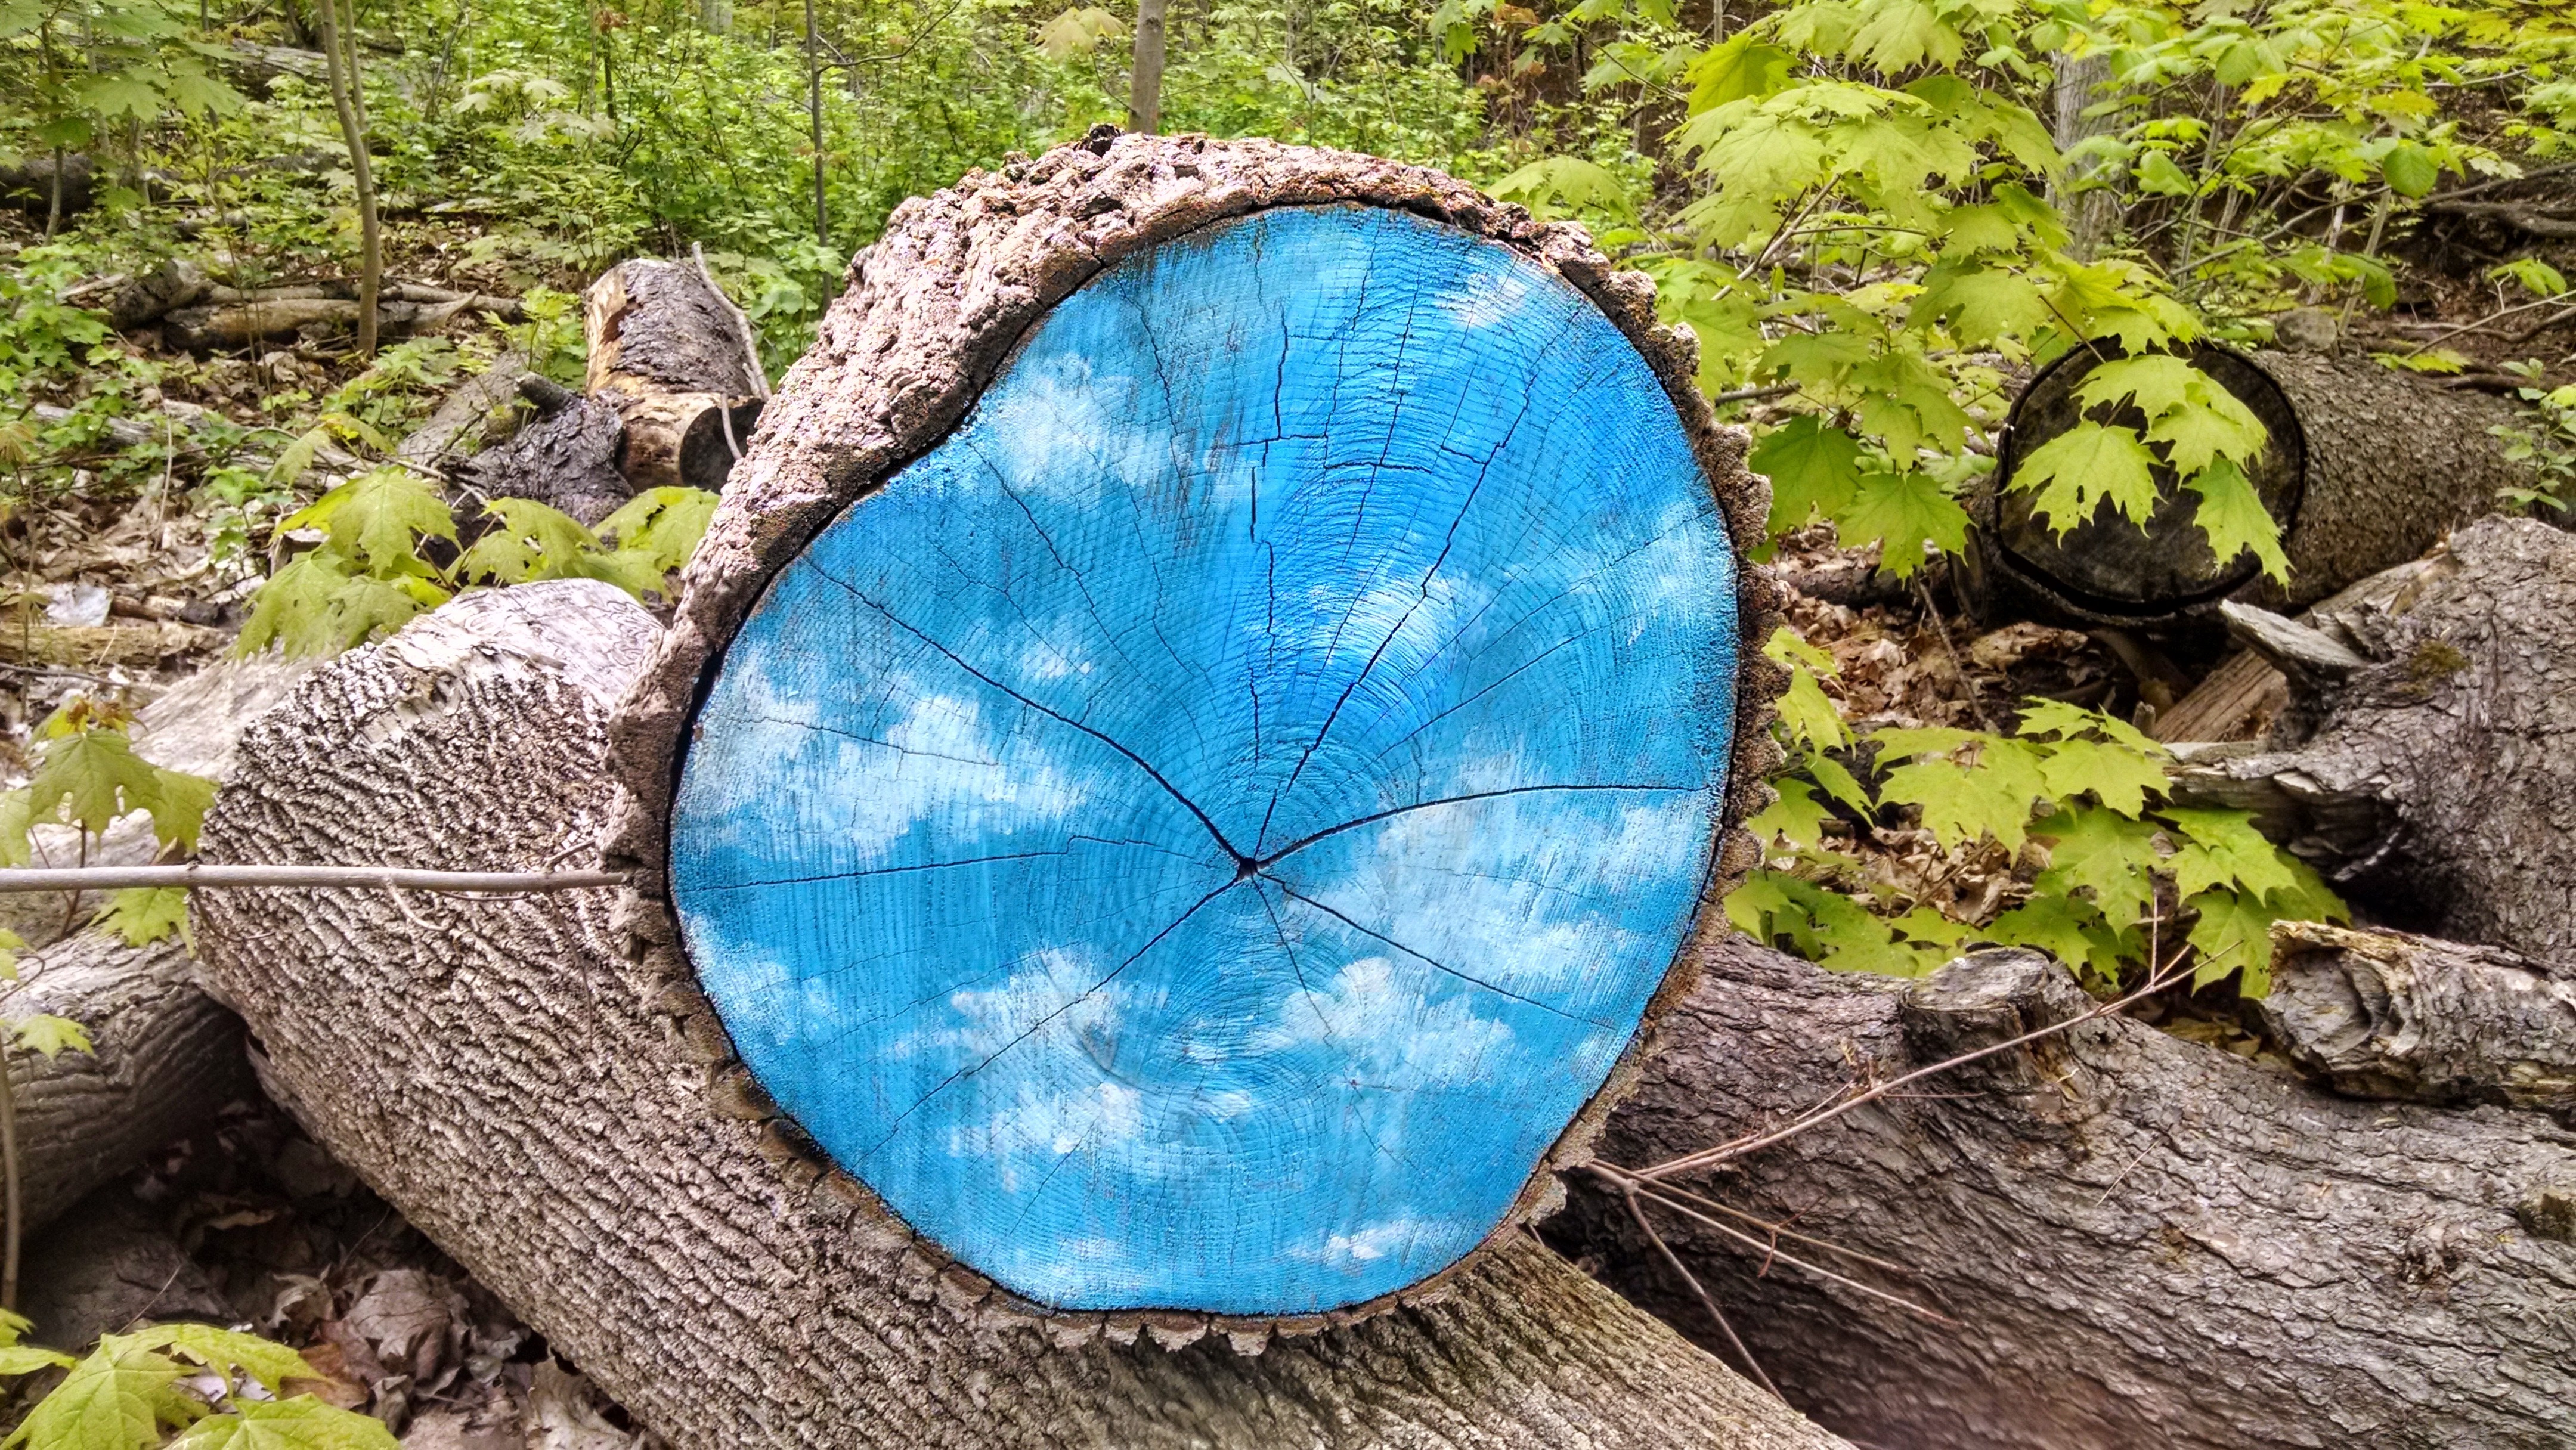 General 4320x2432 nature wood plants outdoors blue artwork painting cyan tree stump log